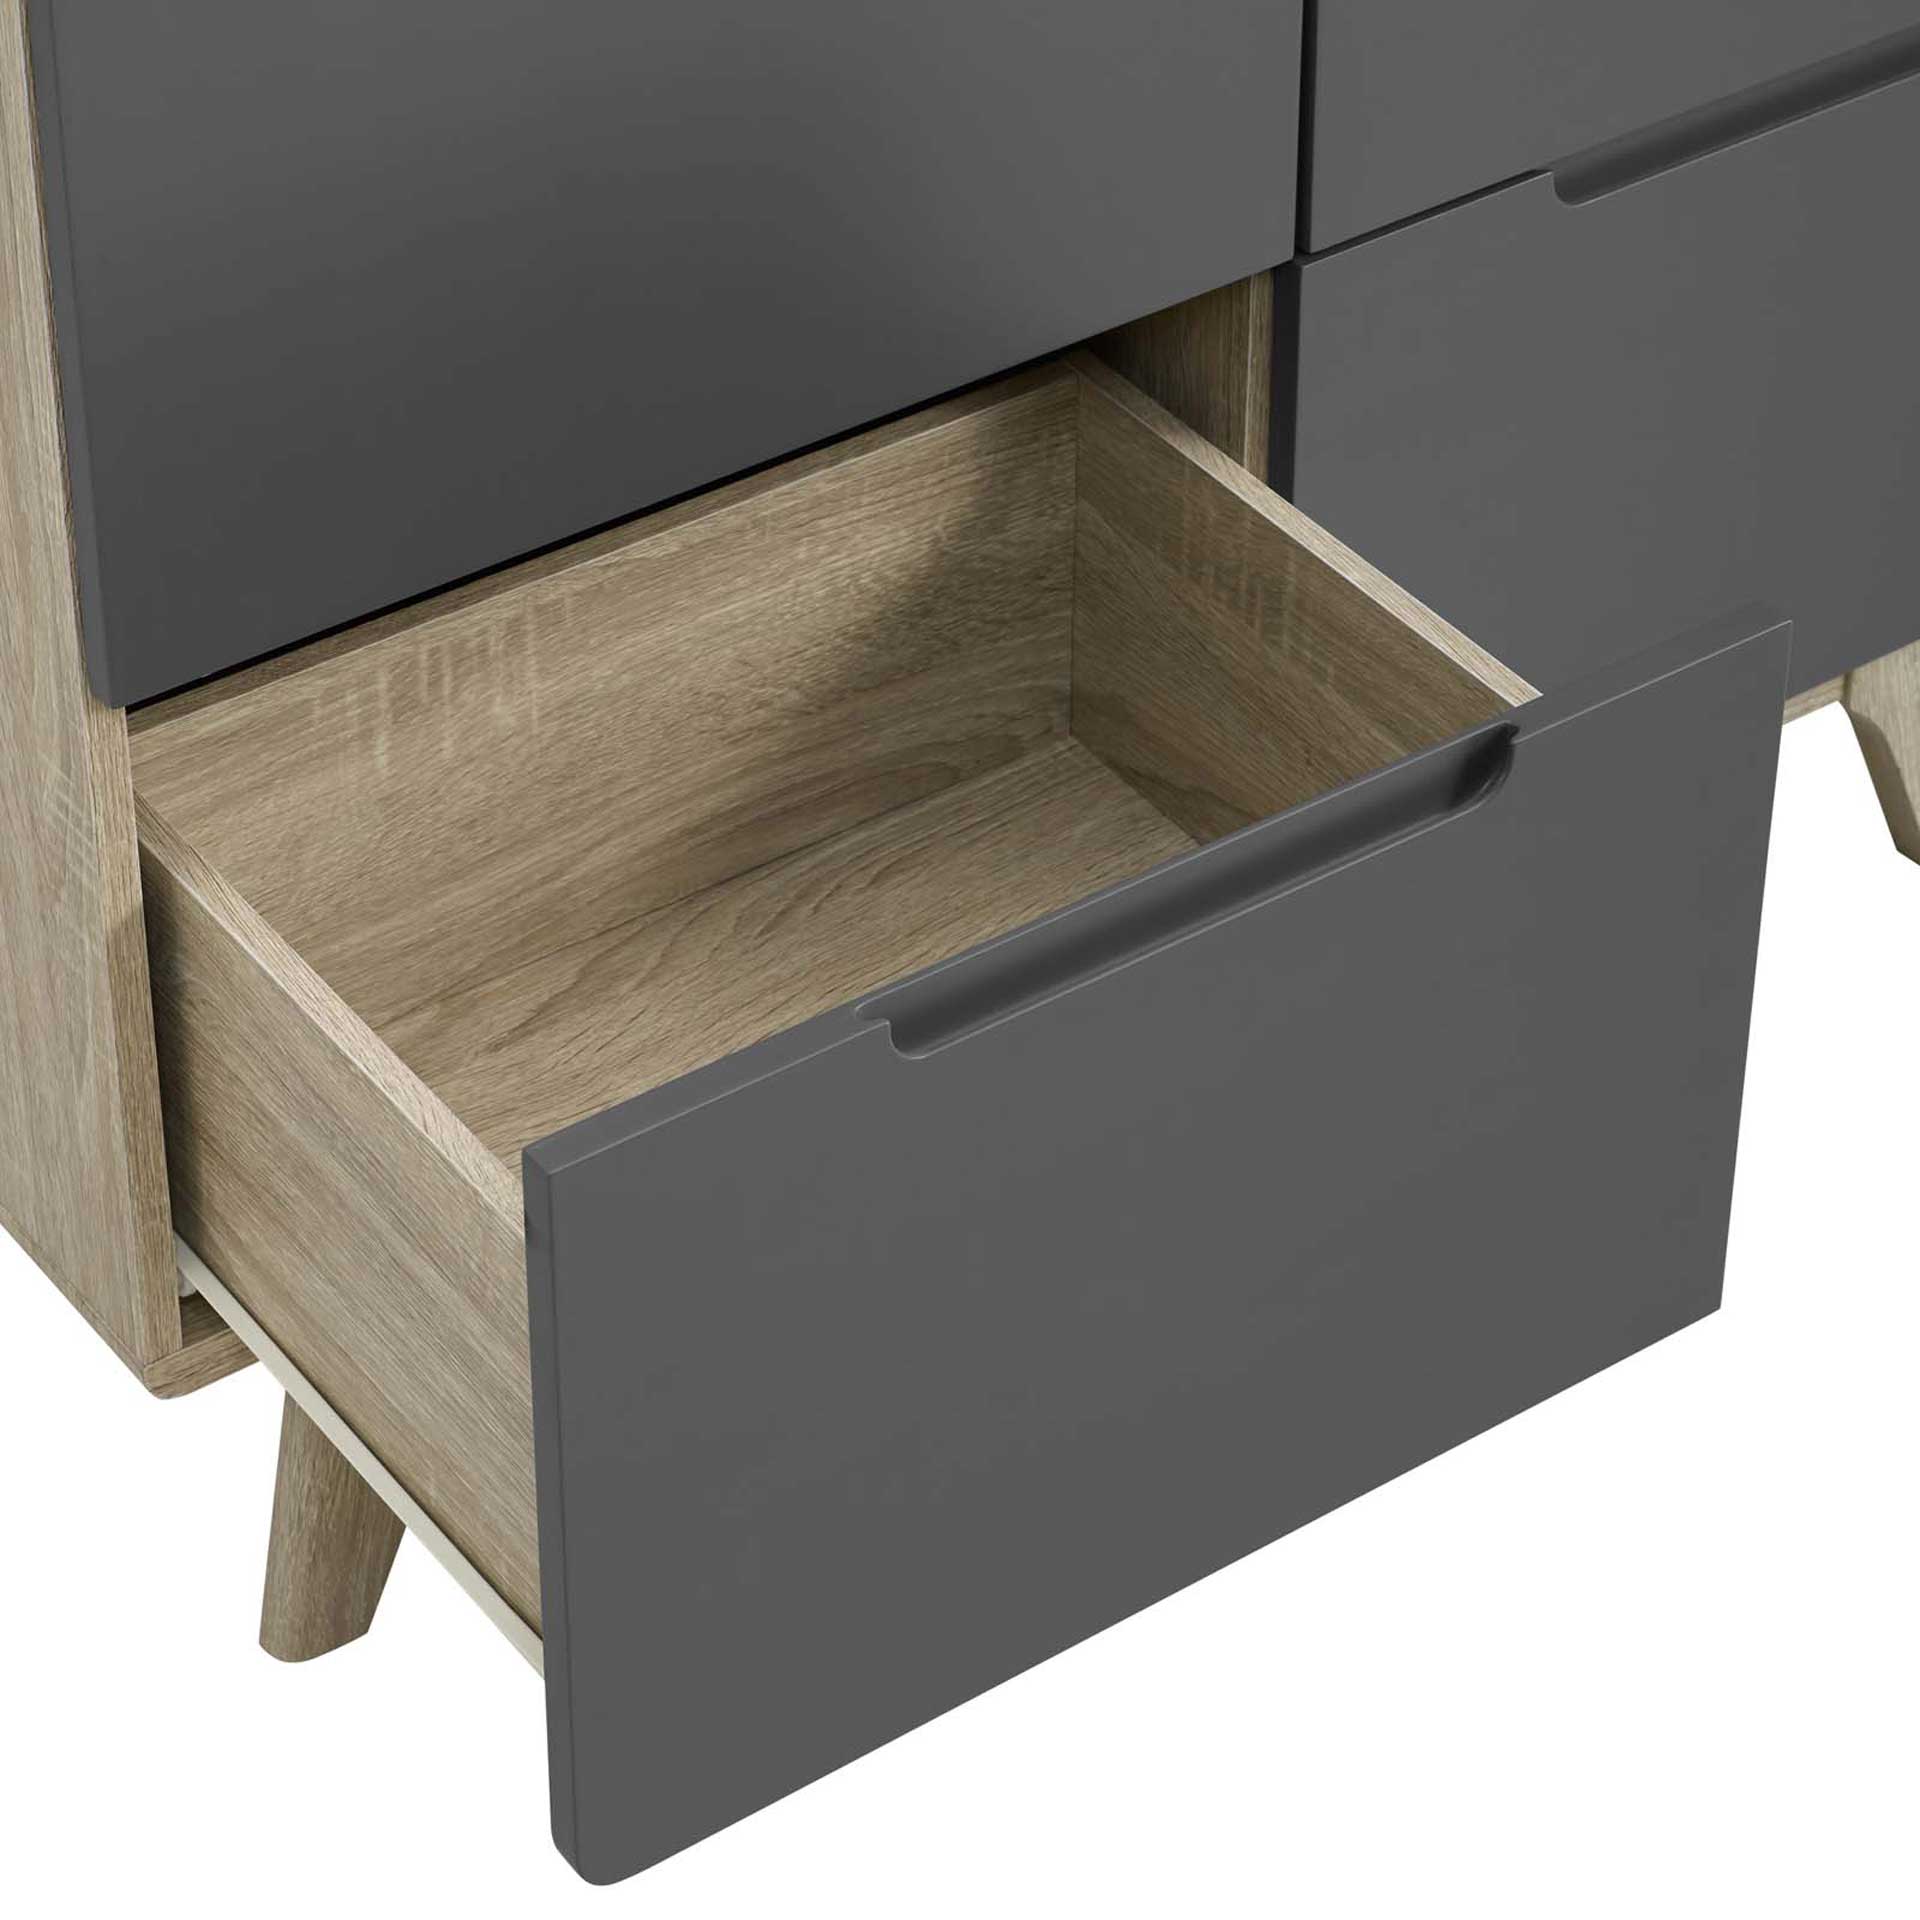 Orion Wood Wardrobe Cabinet Natural Gray